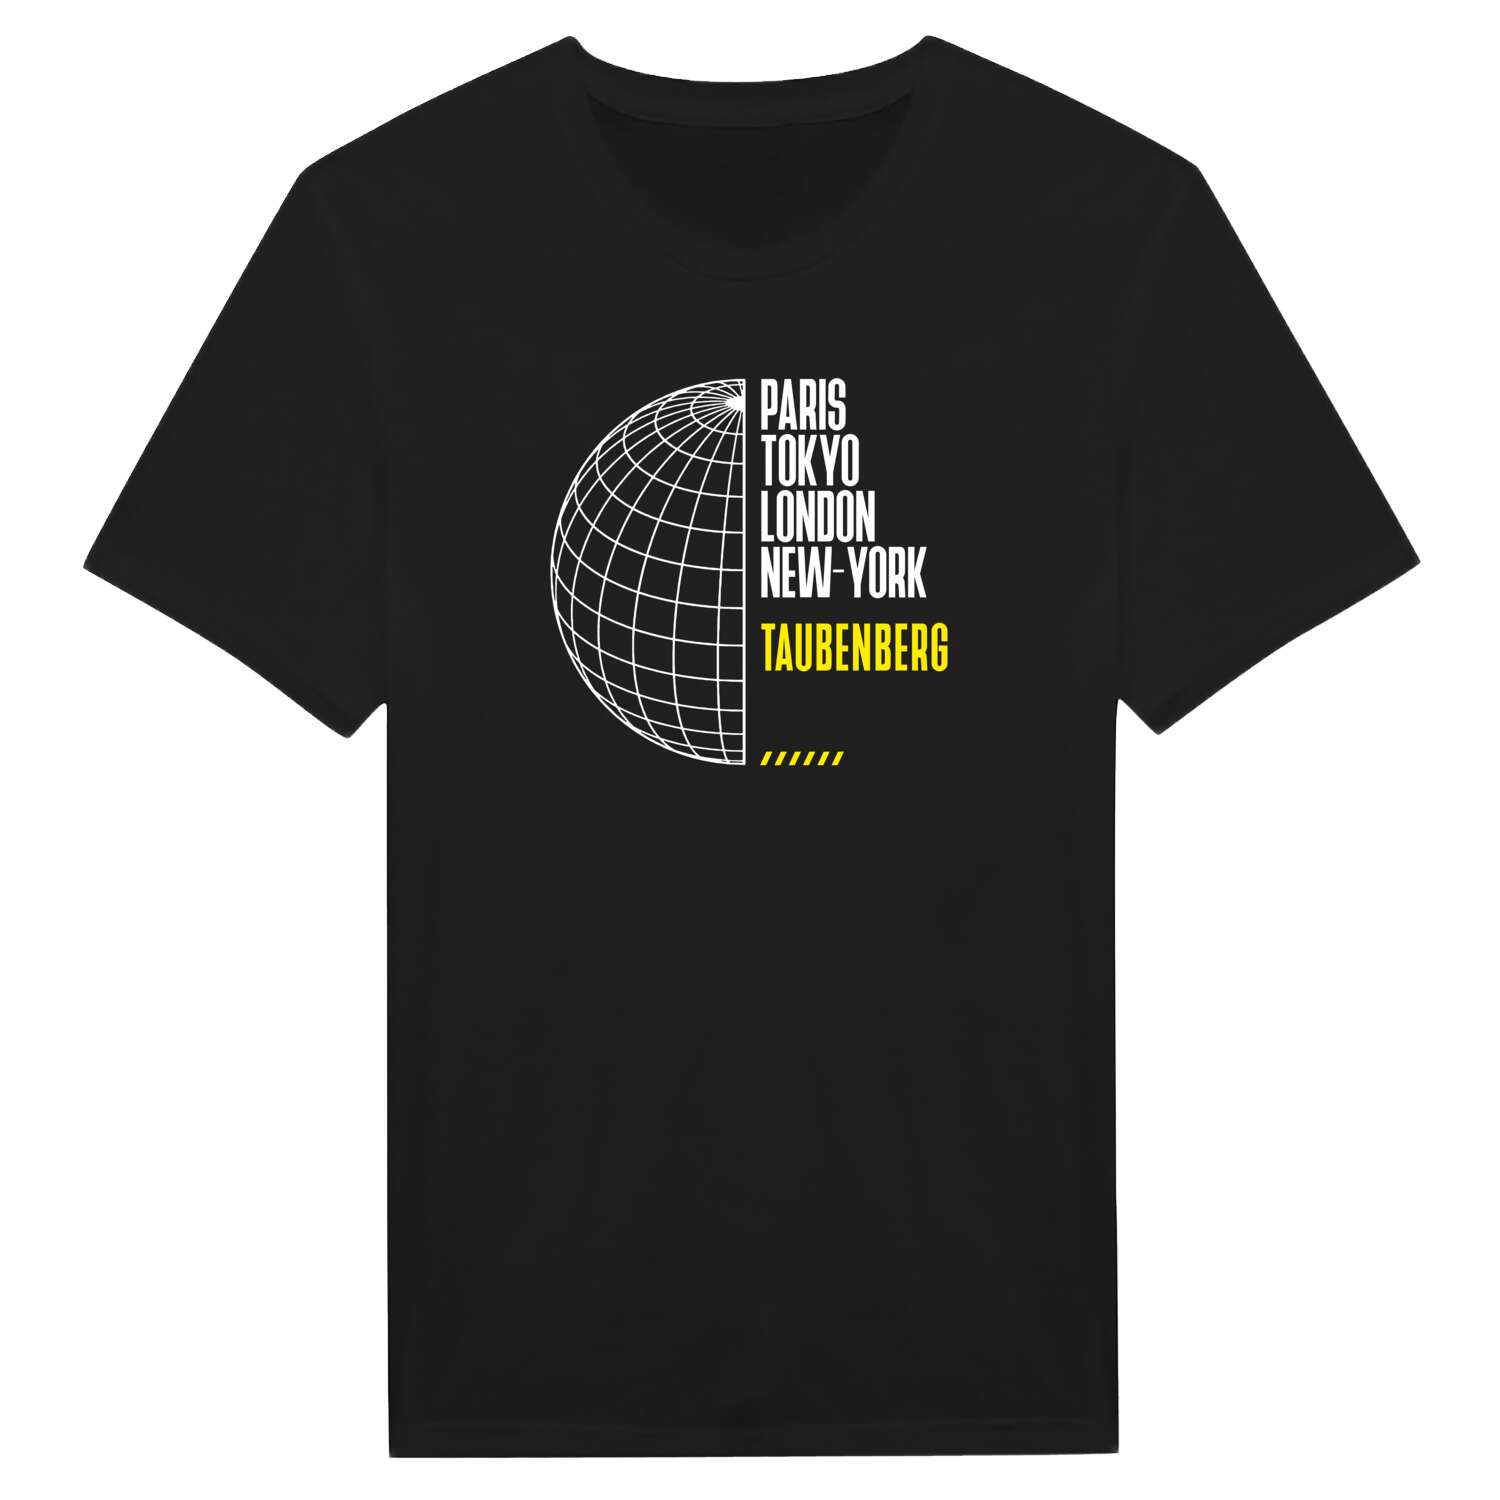 Taubenberg T-Shirt »Paris Tokyo London«